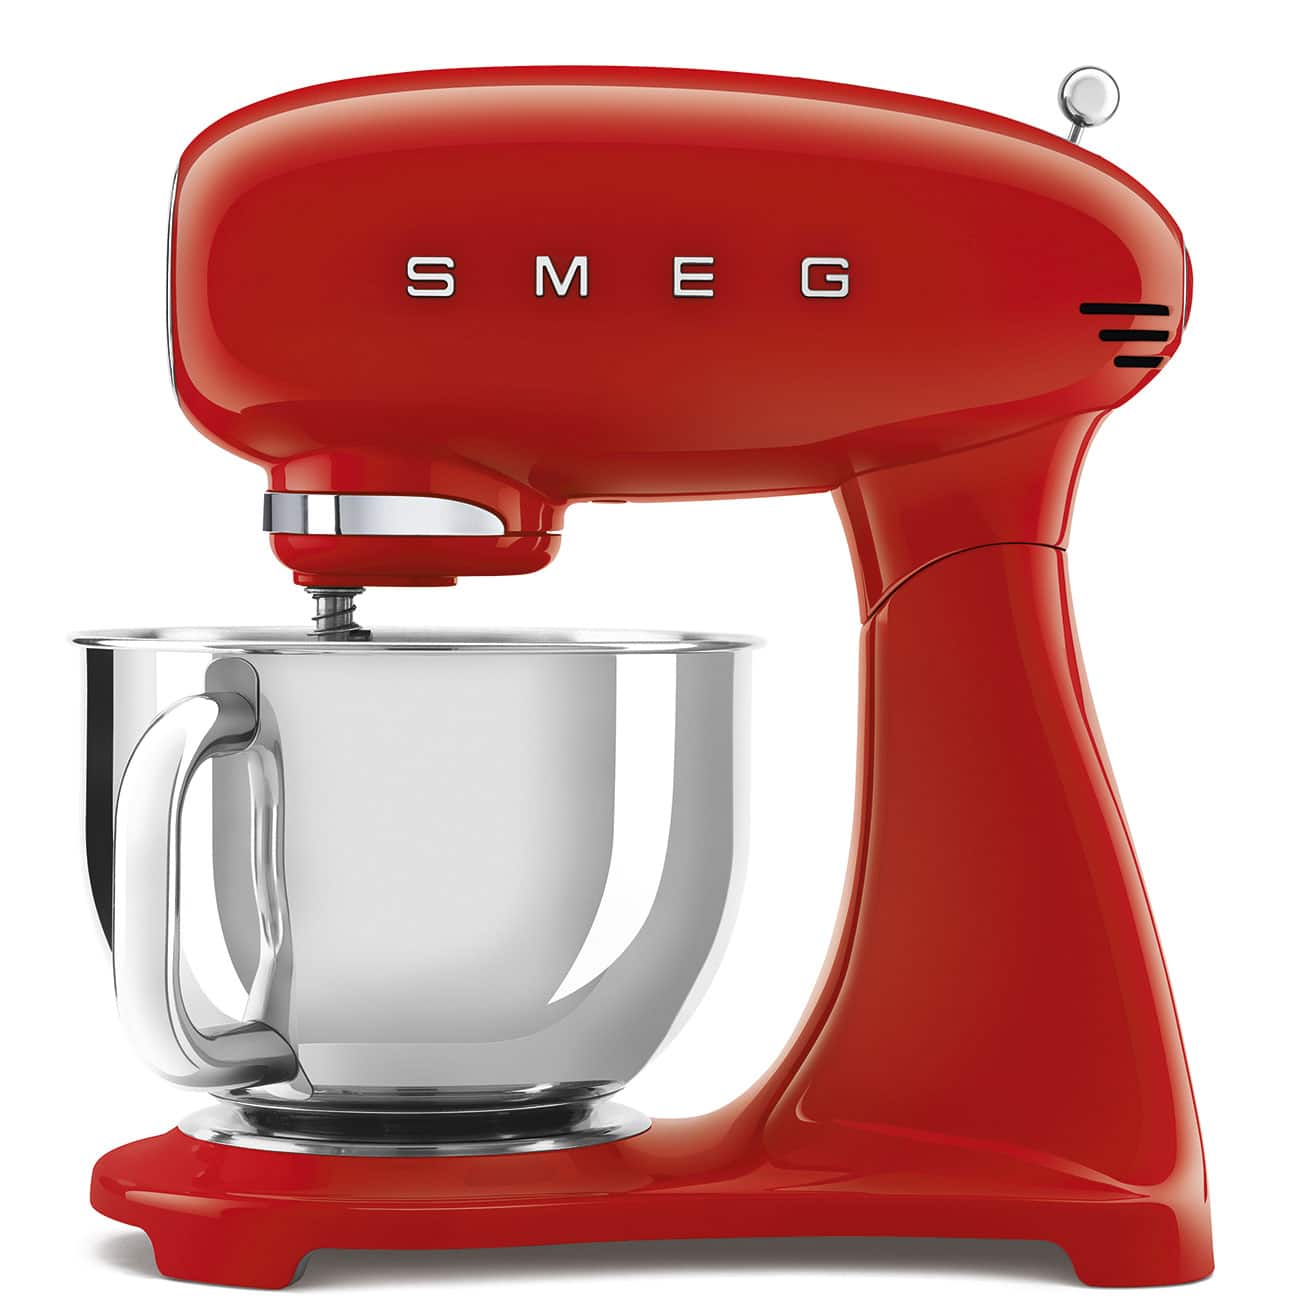 Smeg Retro Kitchen Machine 4.8L Bowl 10 Speed Red